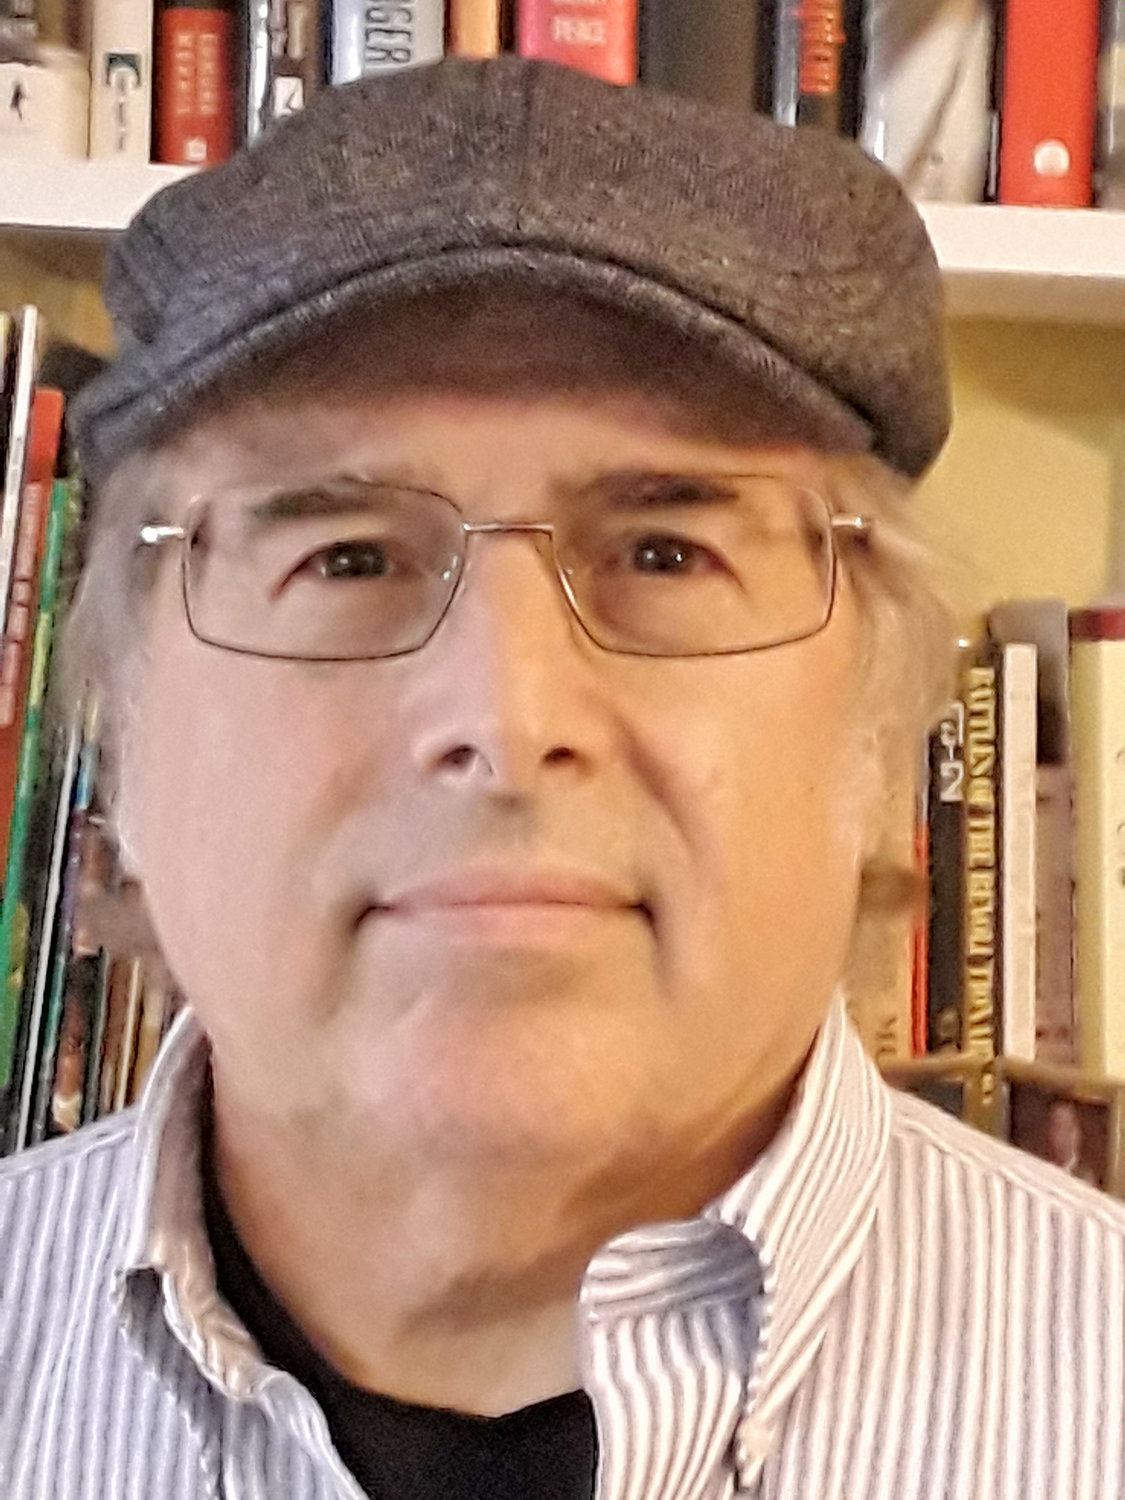 Author David R. Ossont